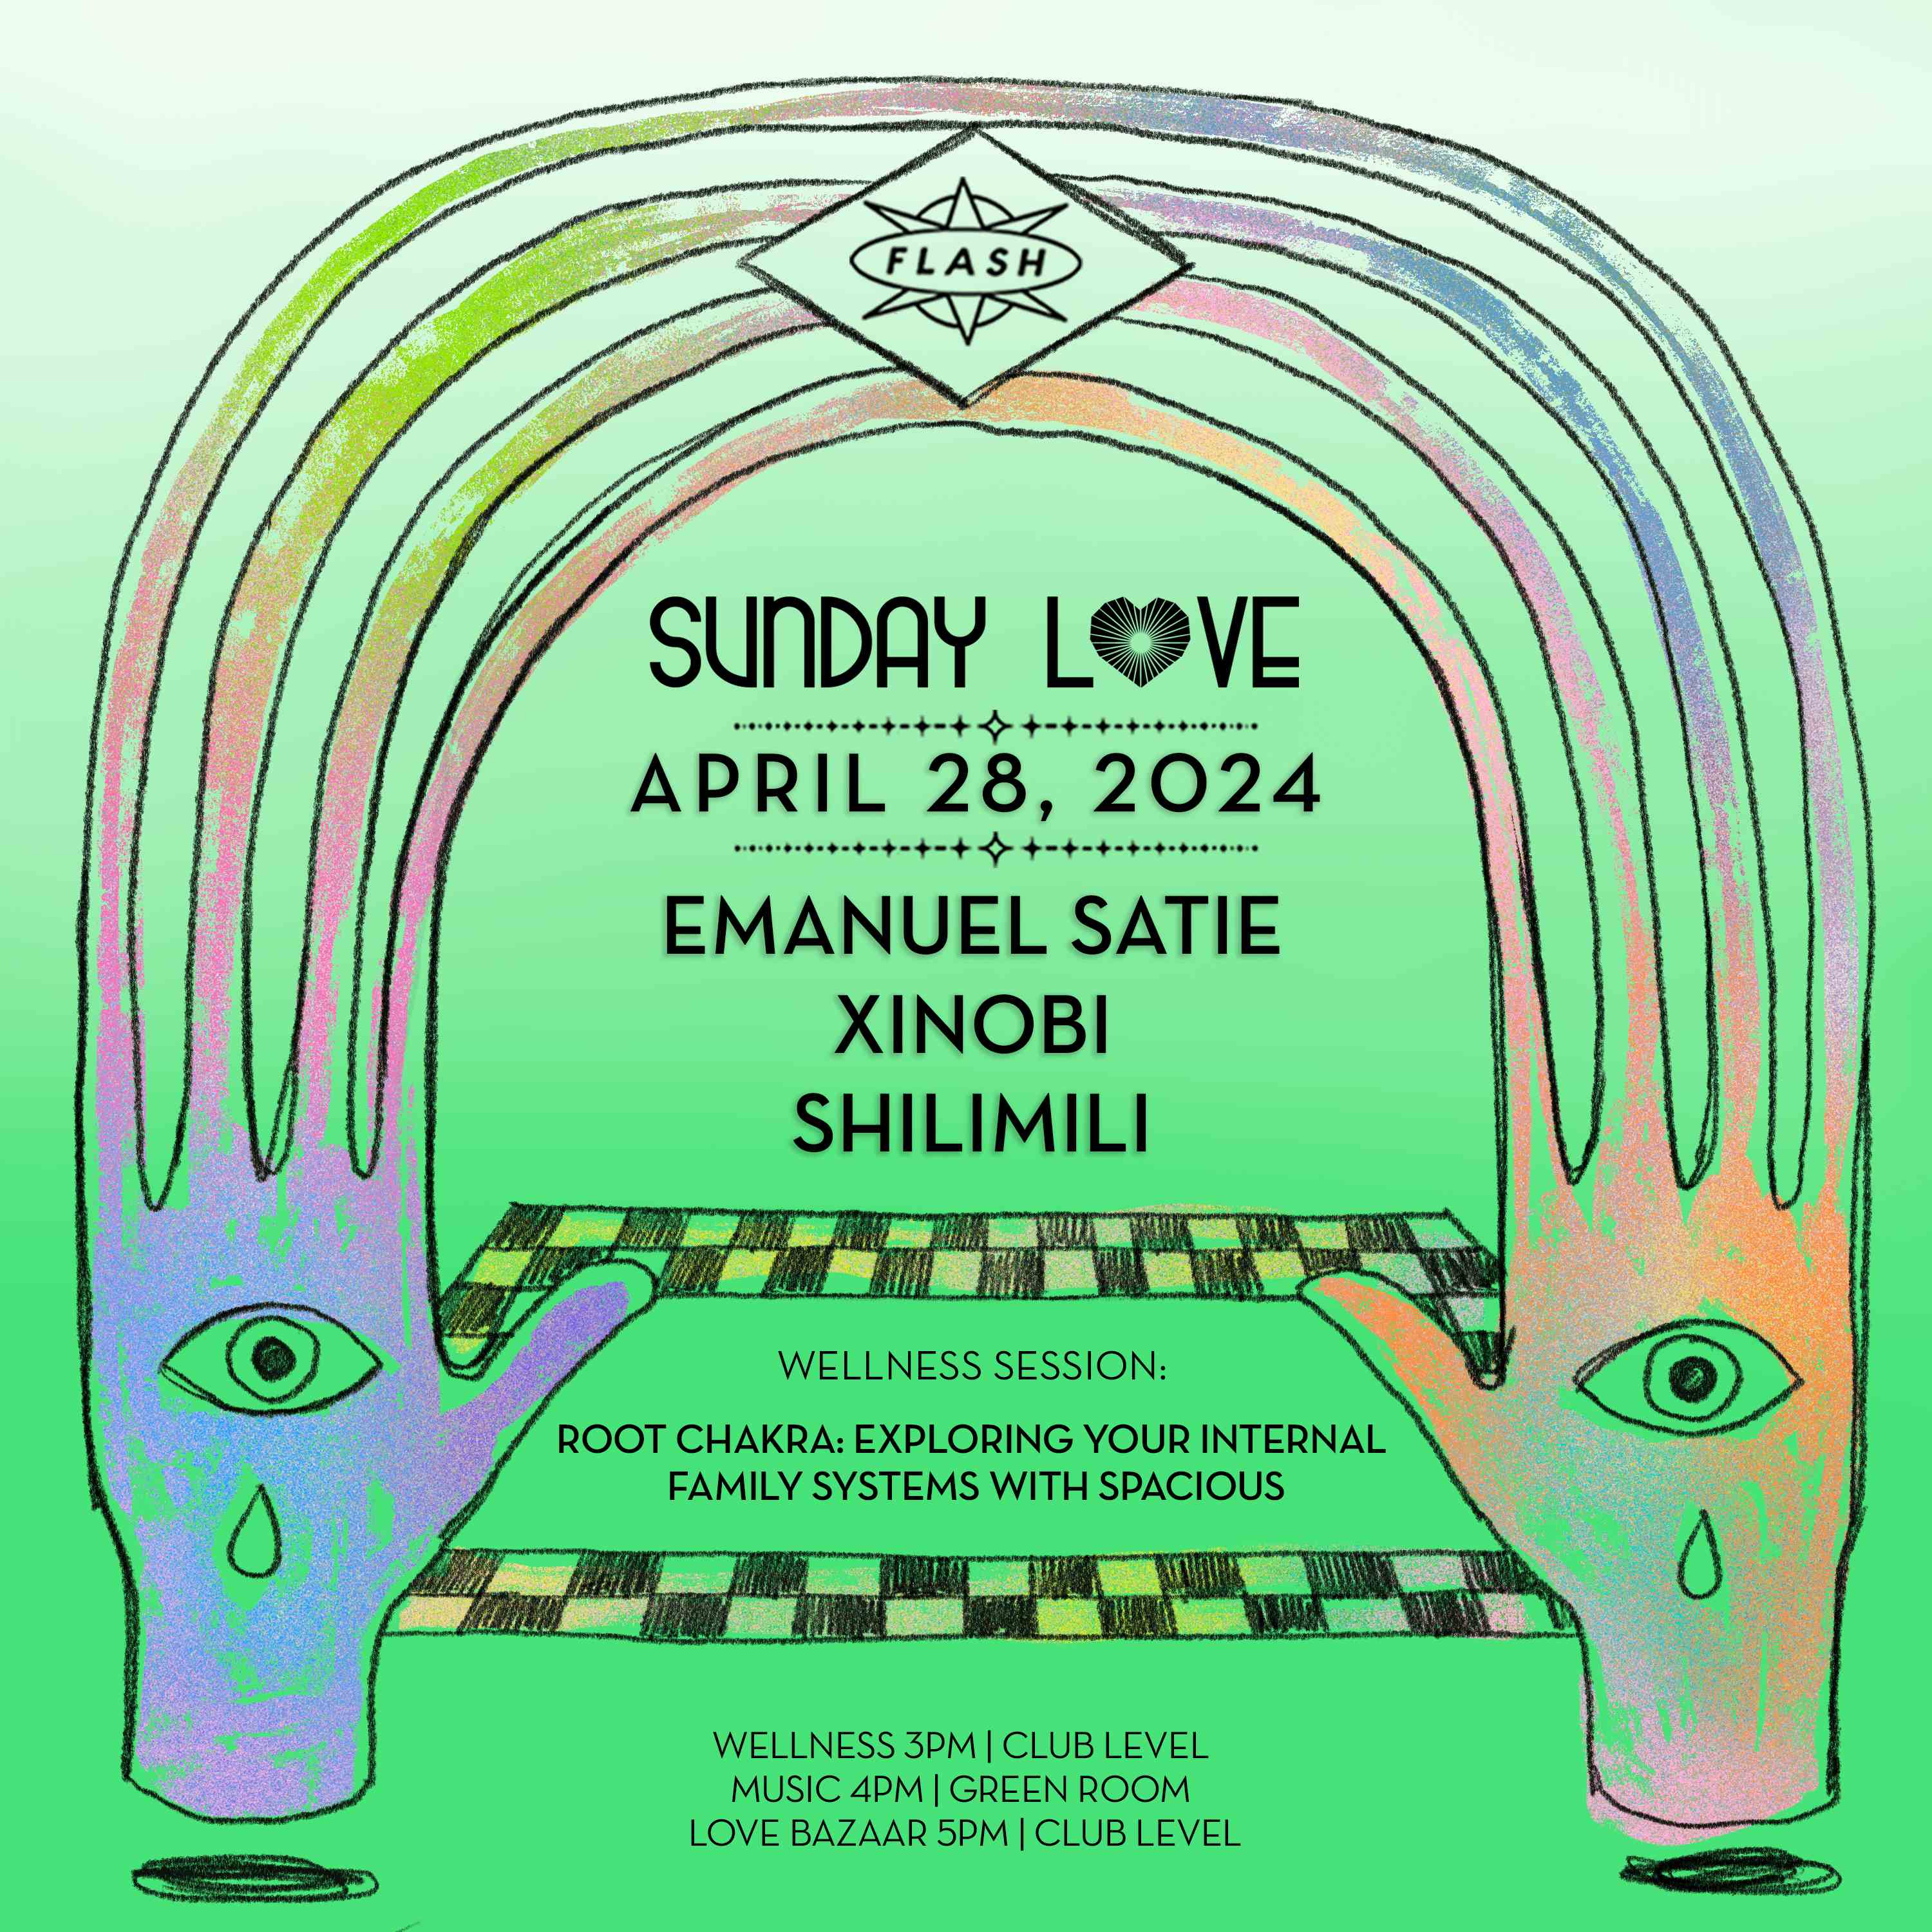 Sunday Love: Emanuel Satie - Xinobi - shilimili event flyer